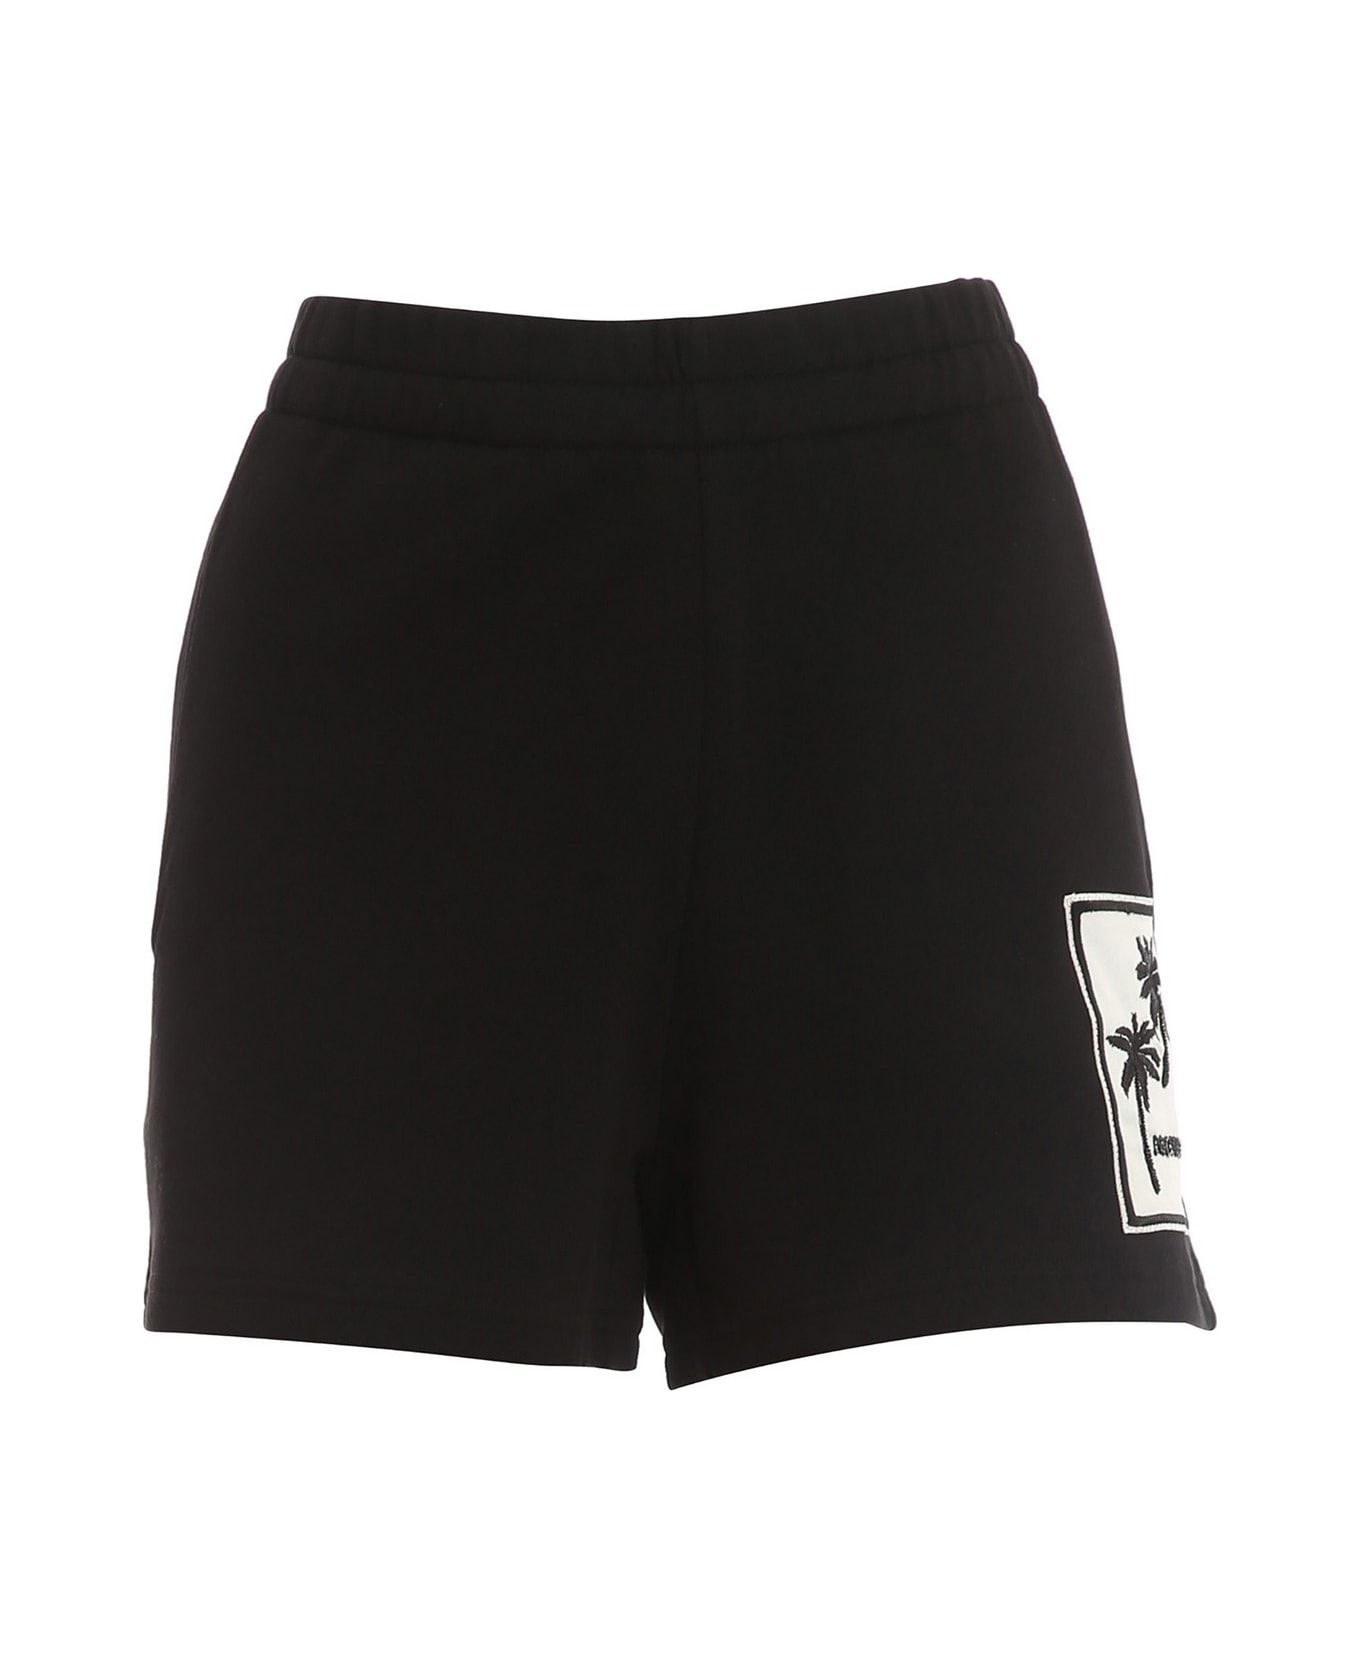 Moncler Shorts Black - Black